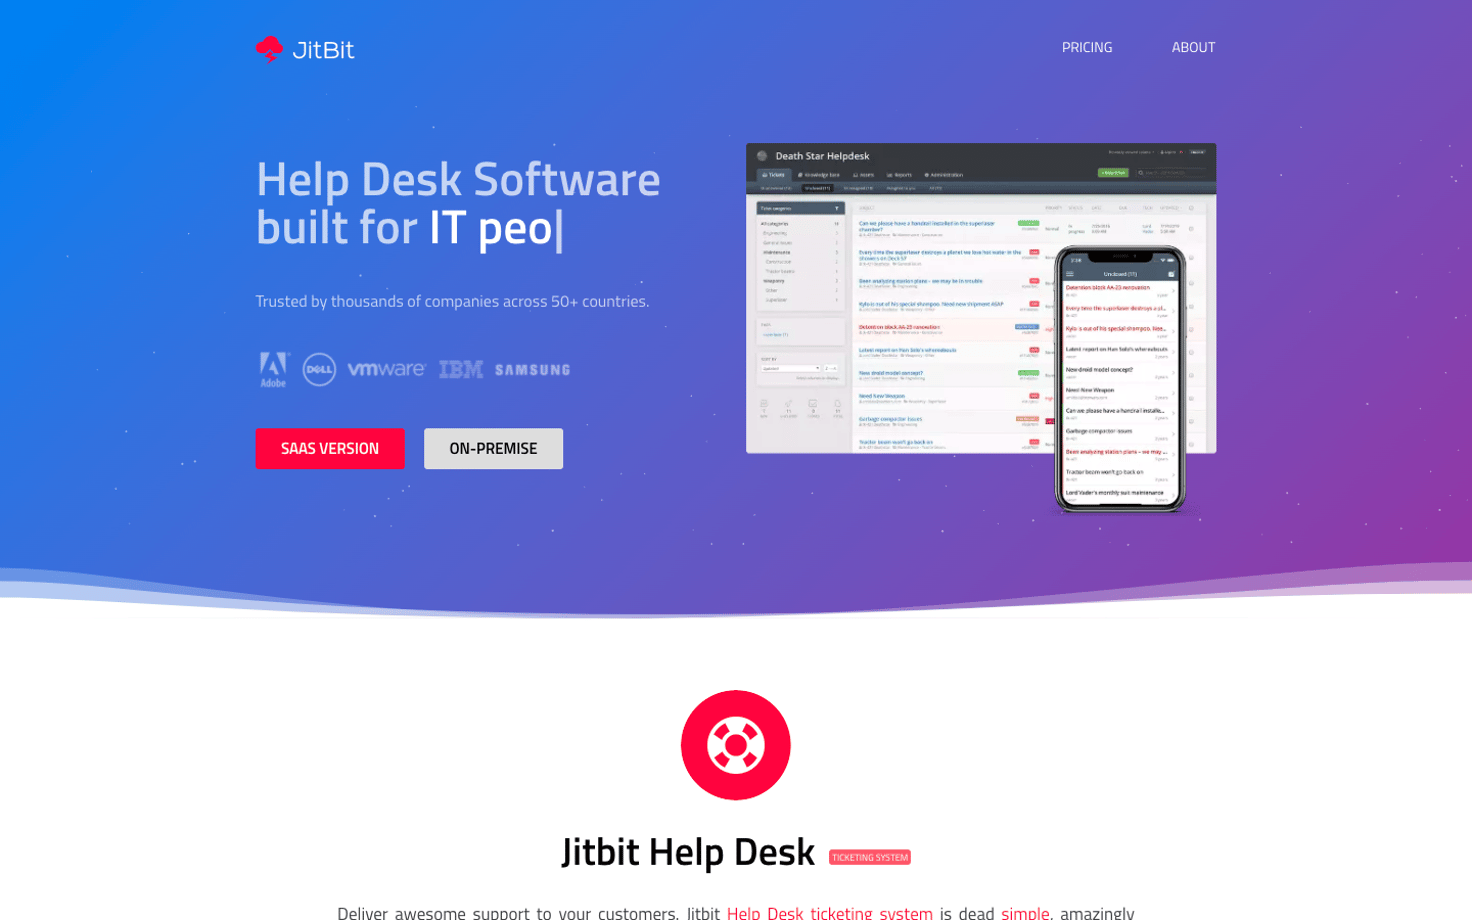 JitBit homepage: Help Desk Software built for IT people